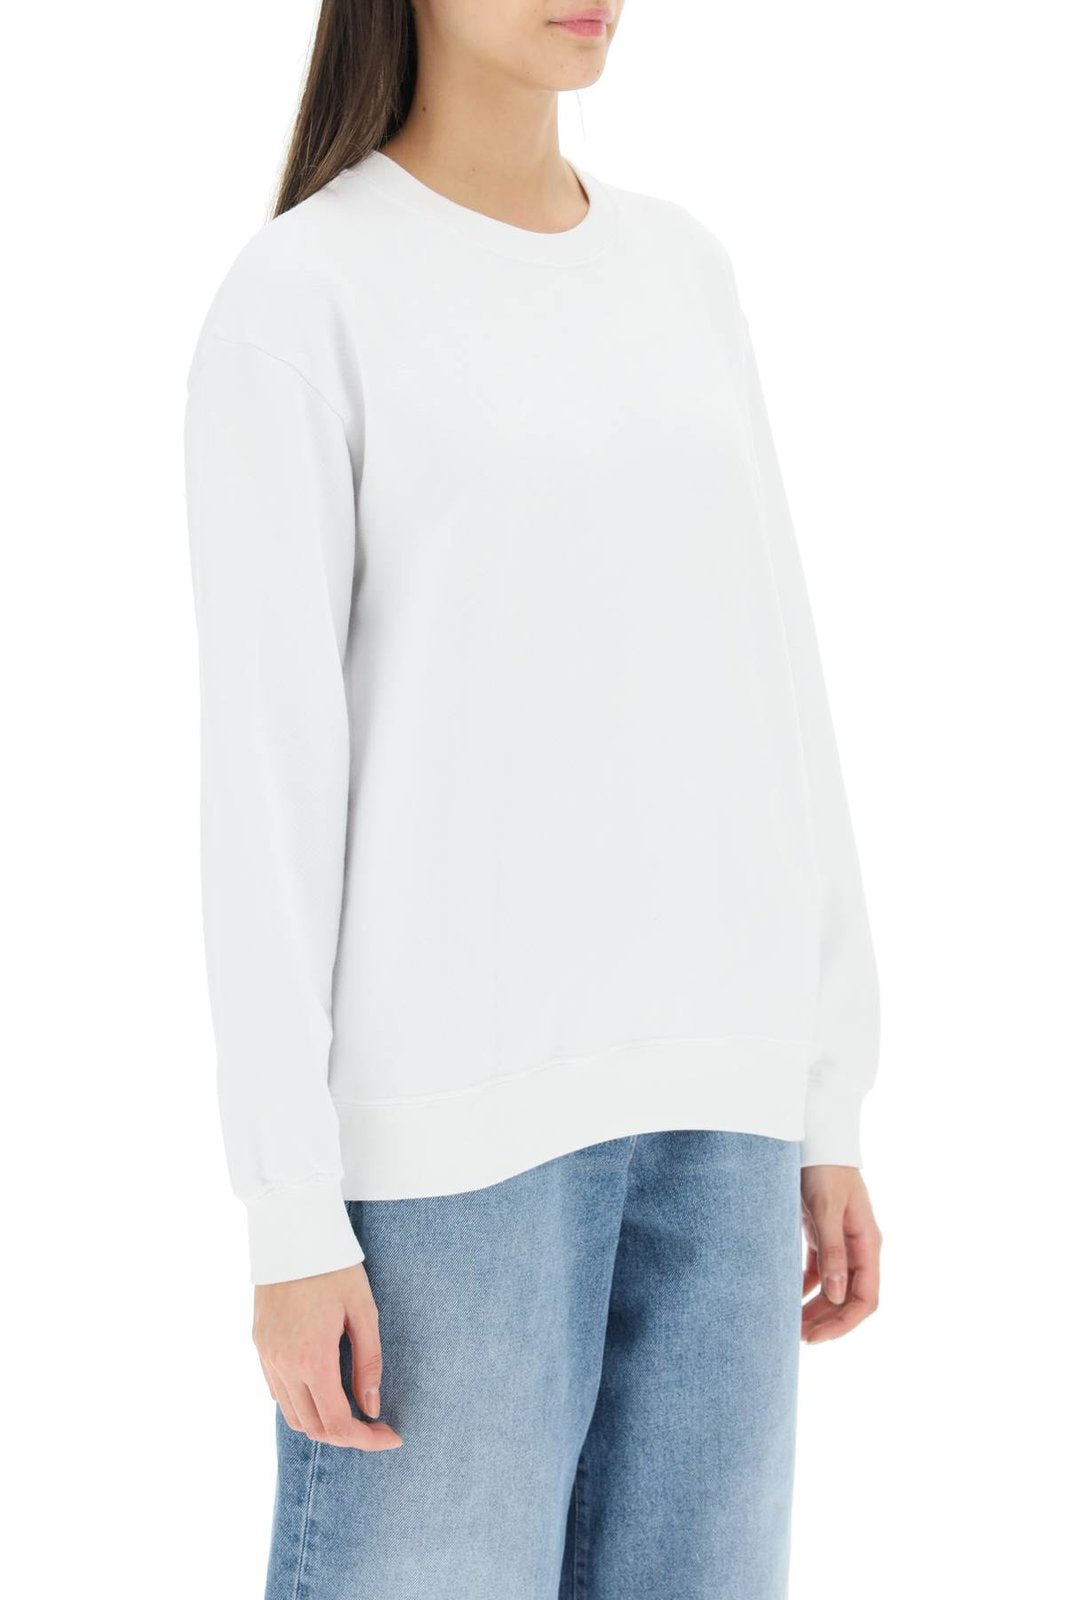 Off-White Diag Printed Crewneck Sweatshirt